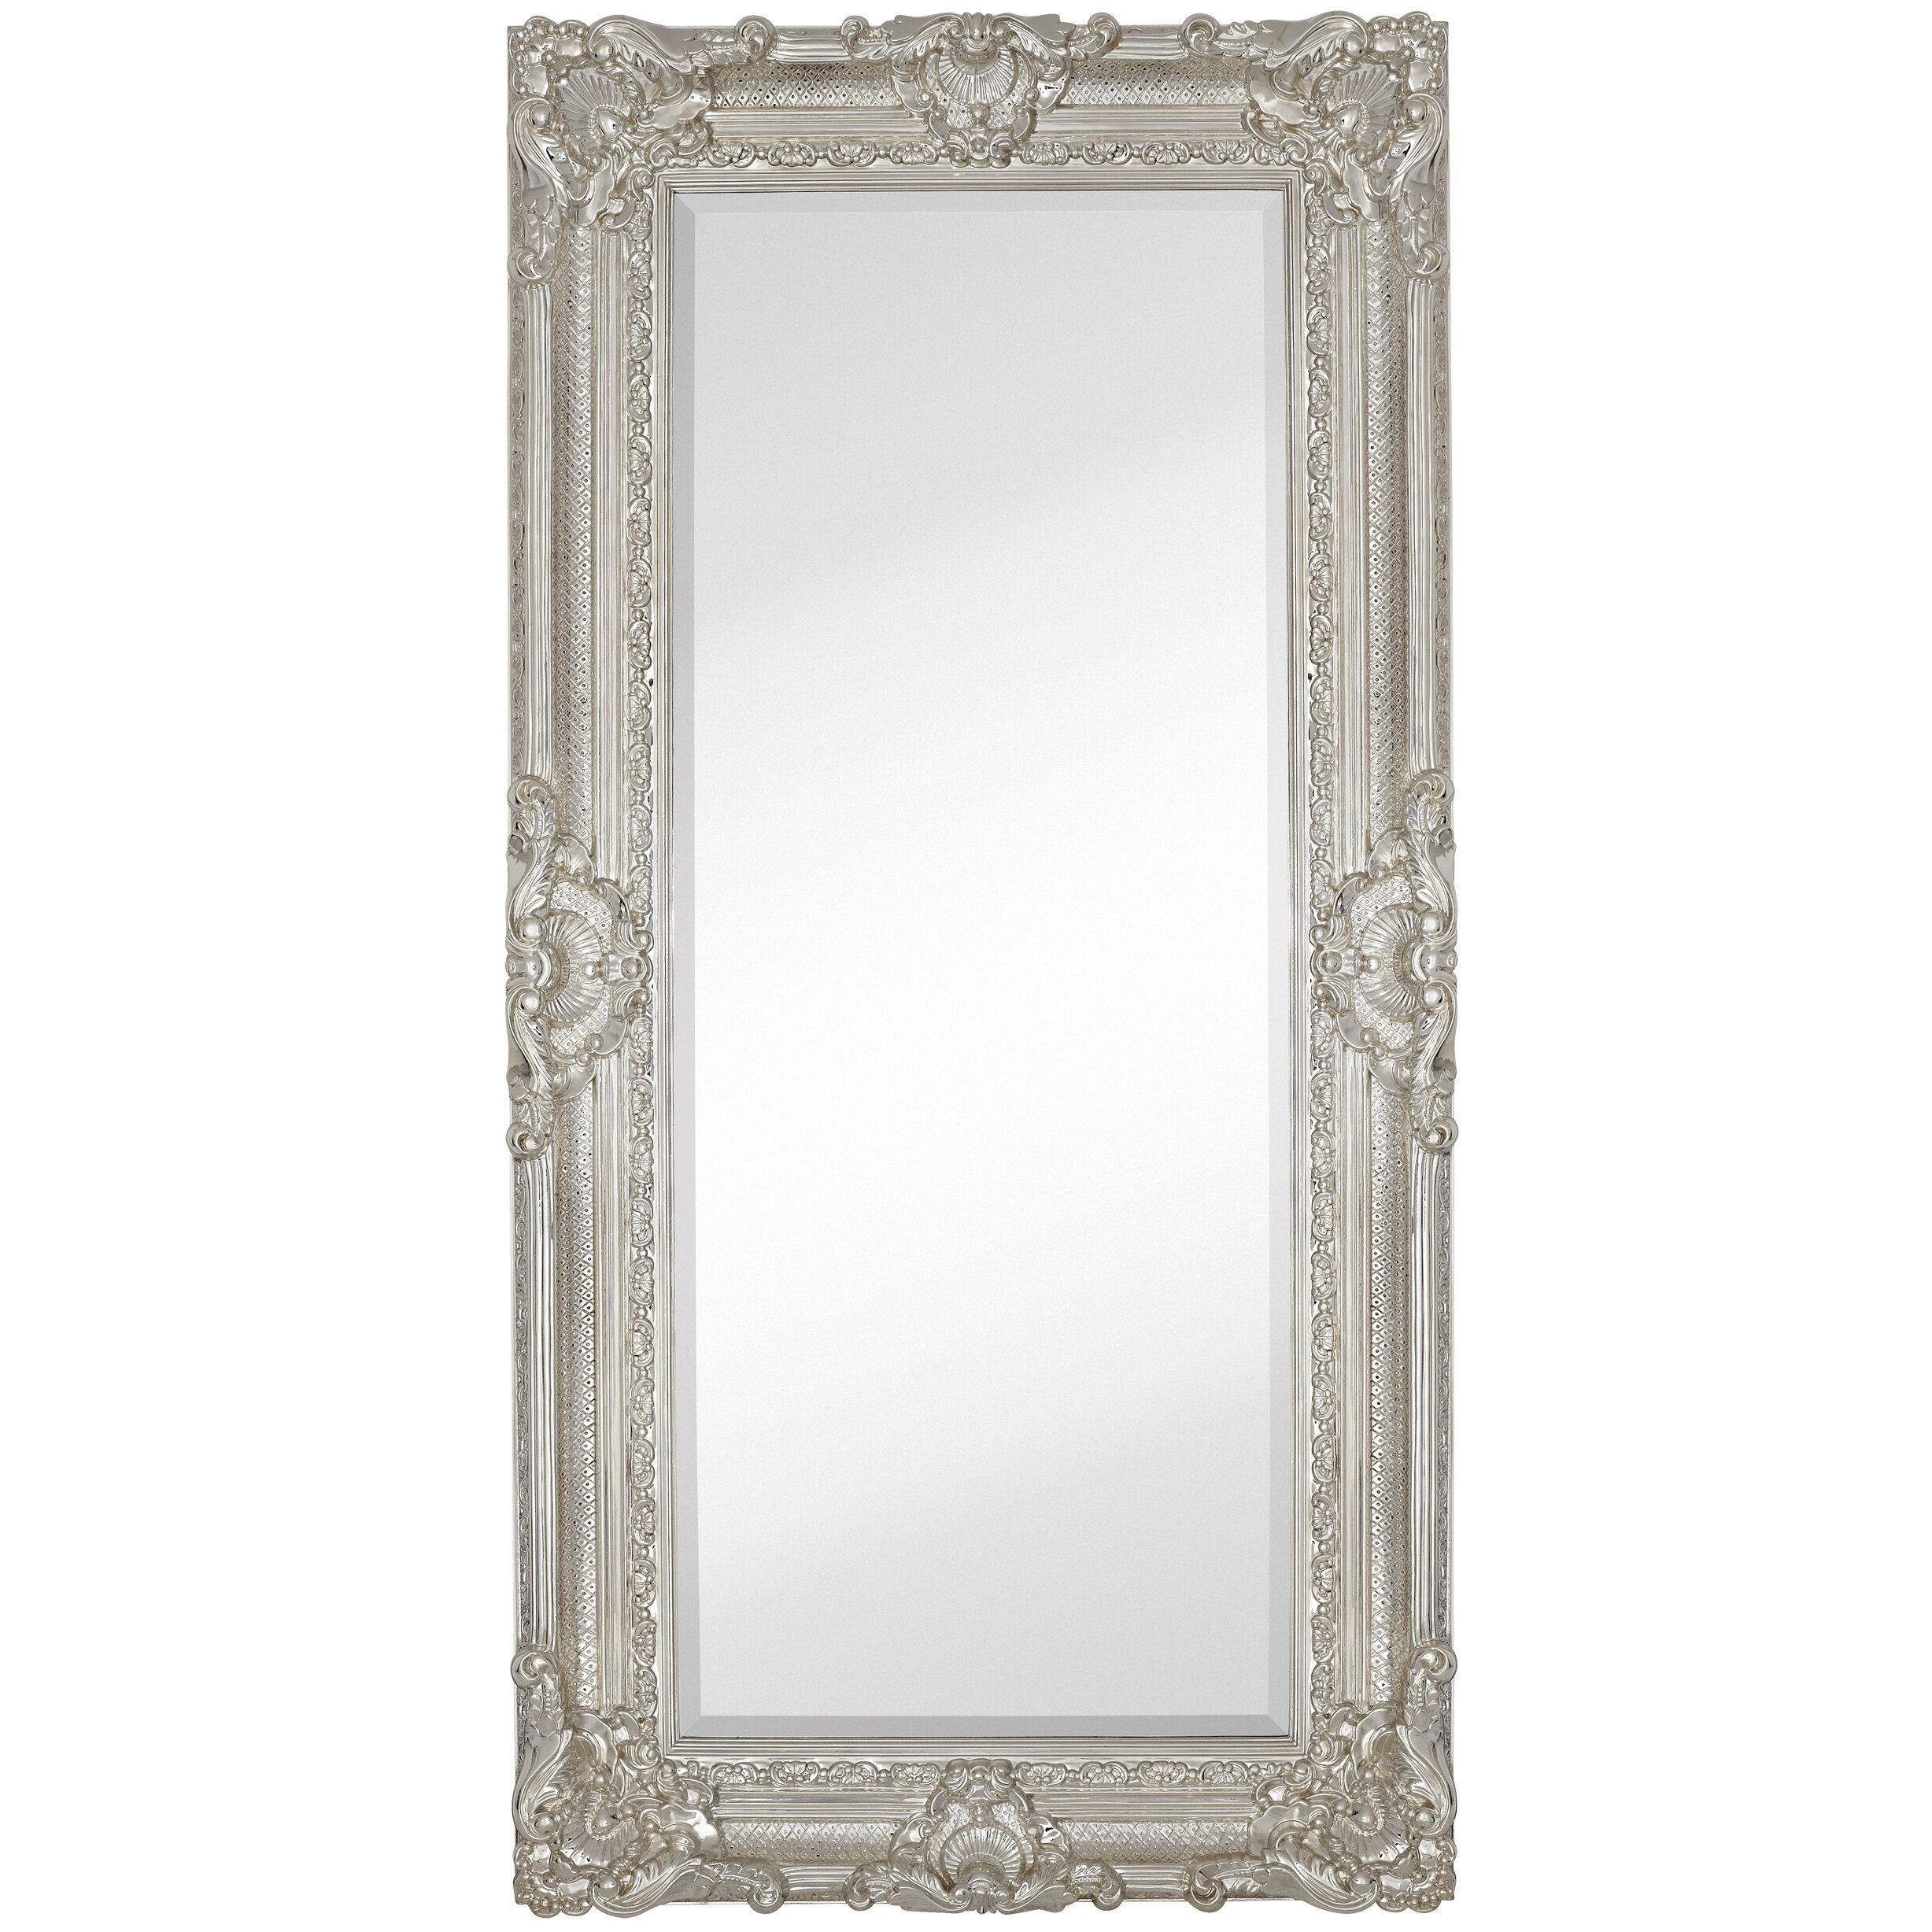 Majestic Mirror Large Traditional Polished Chrome Rectangular Beveled Within Traditional Beveled Wall Mirrors (Photo 13 of 15)